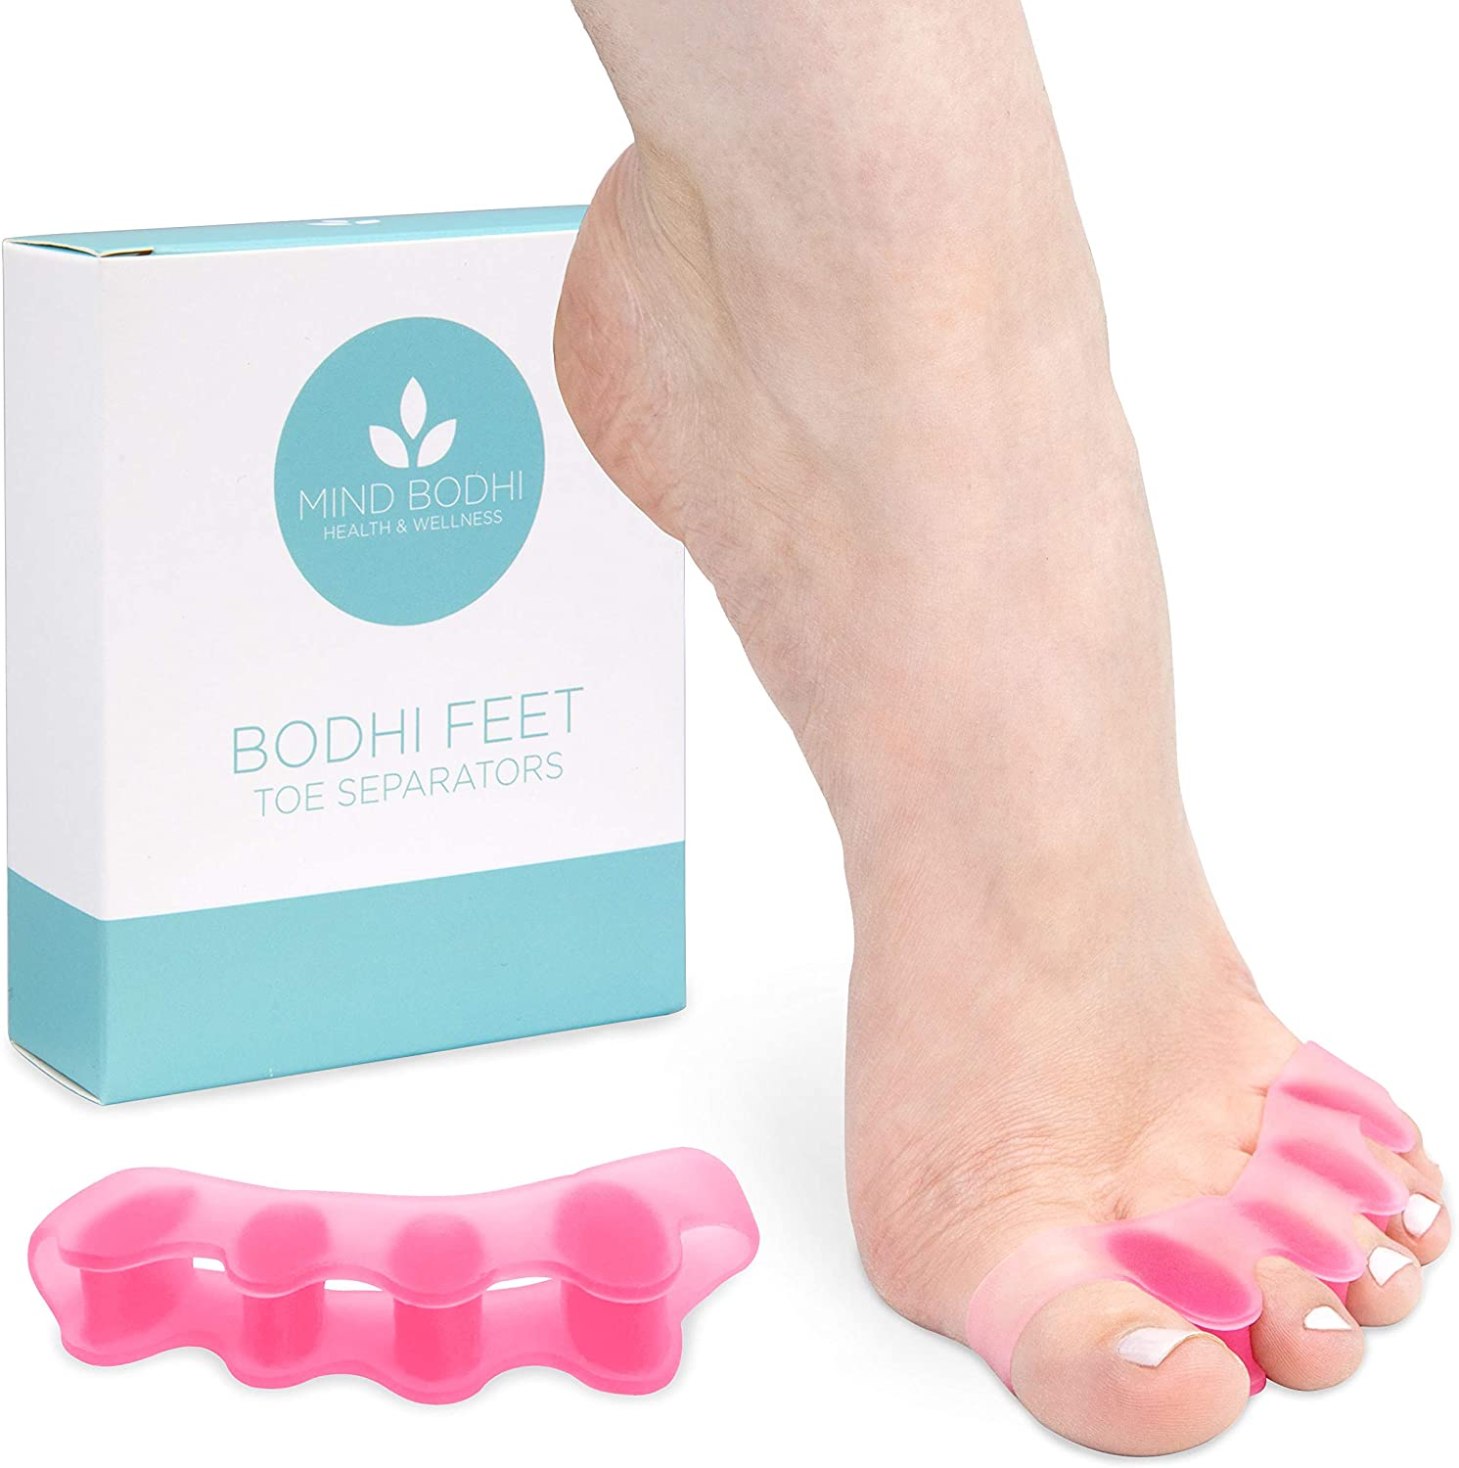 mind bodhi toes, podiatrist recommended toe separators